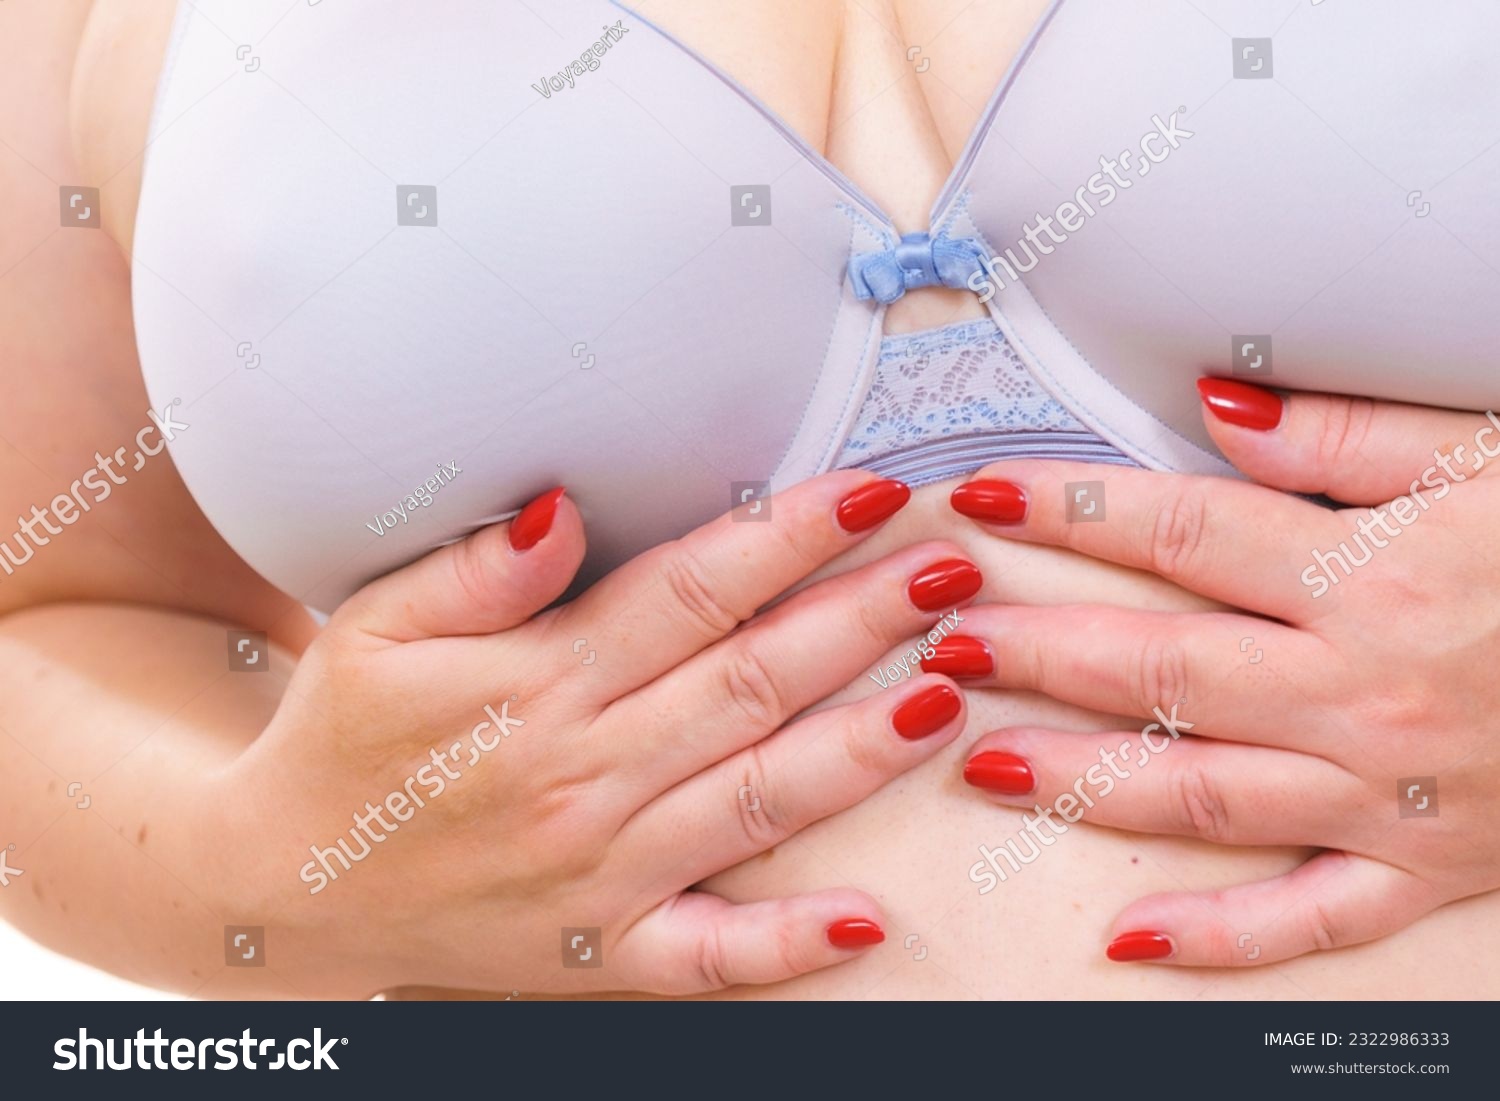 adam teves recommends big tits stranger pic